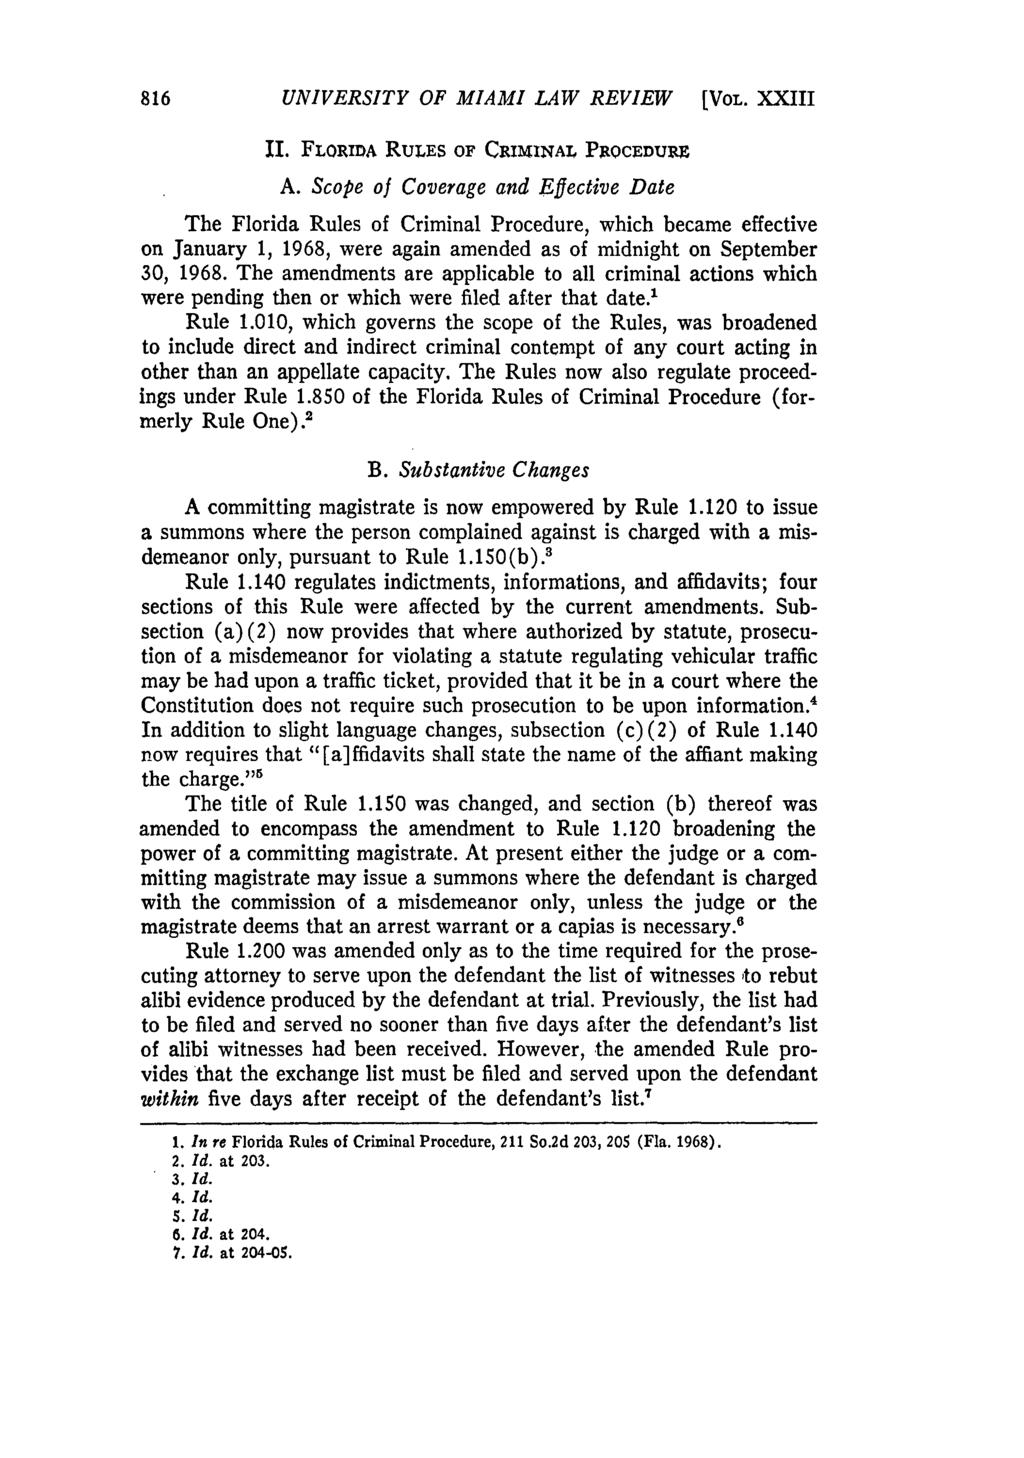 UNIVERSITY OF MIAMI LAW REVIEW [VOL. XXIII II. FLORIMA RULES OF CRIMINAL PROCEDURE A.